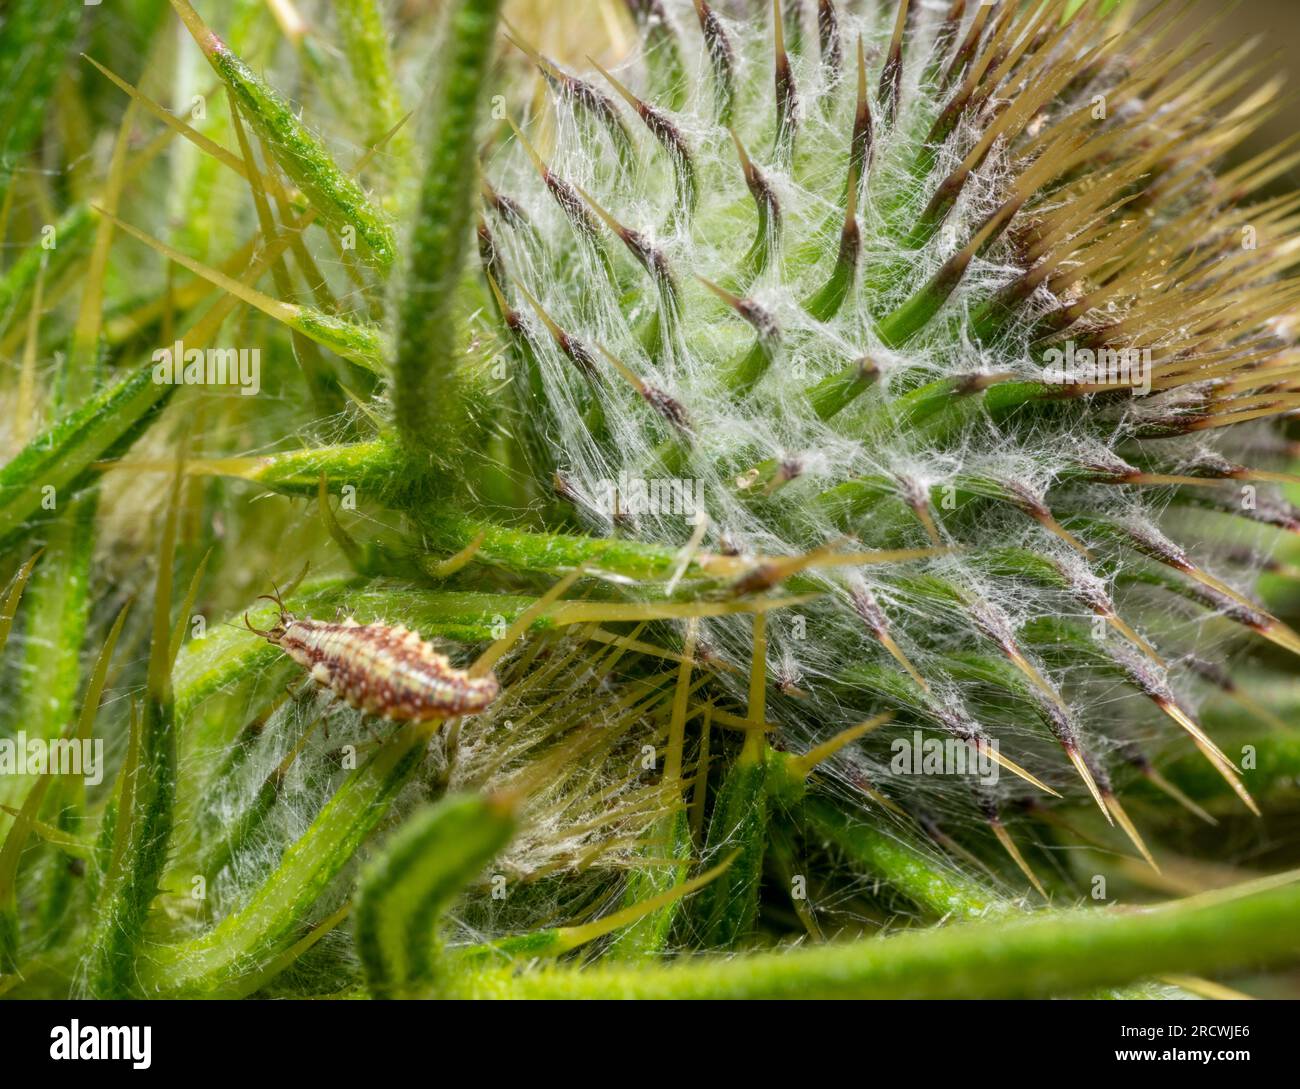 Green lacewing larva near green thistle bud Stock Photo